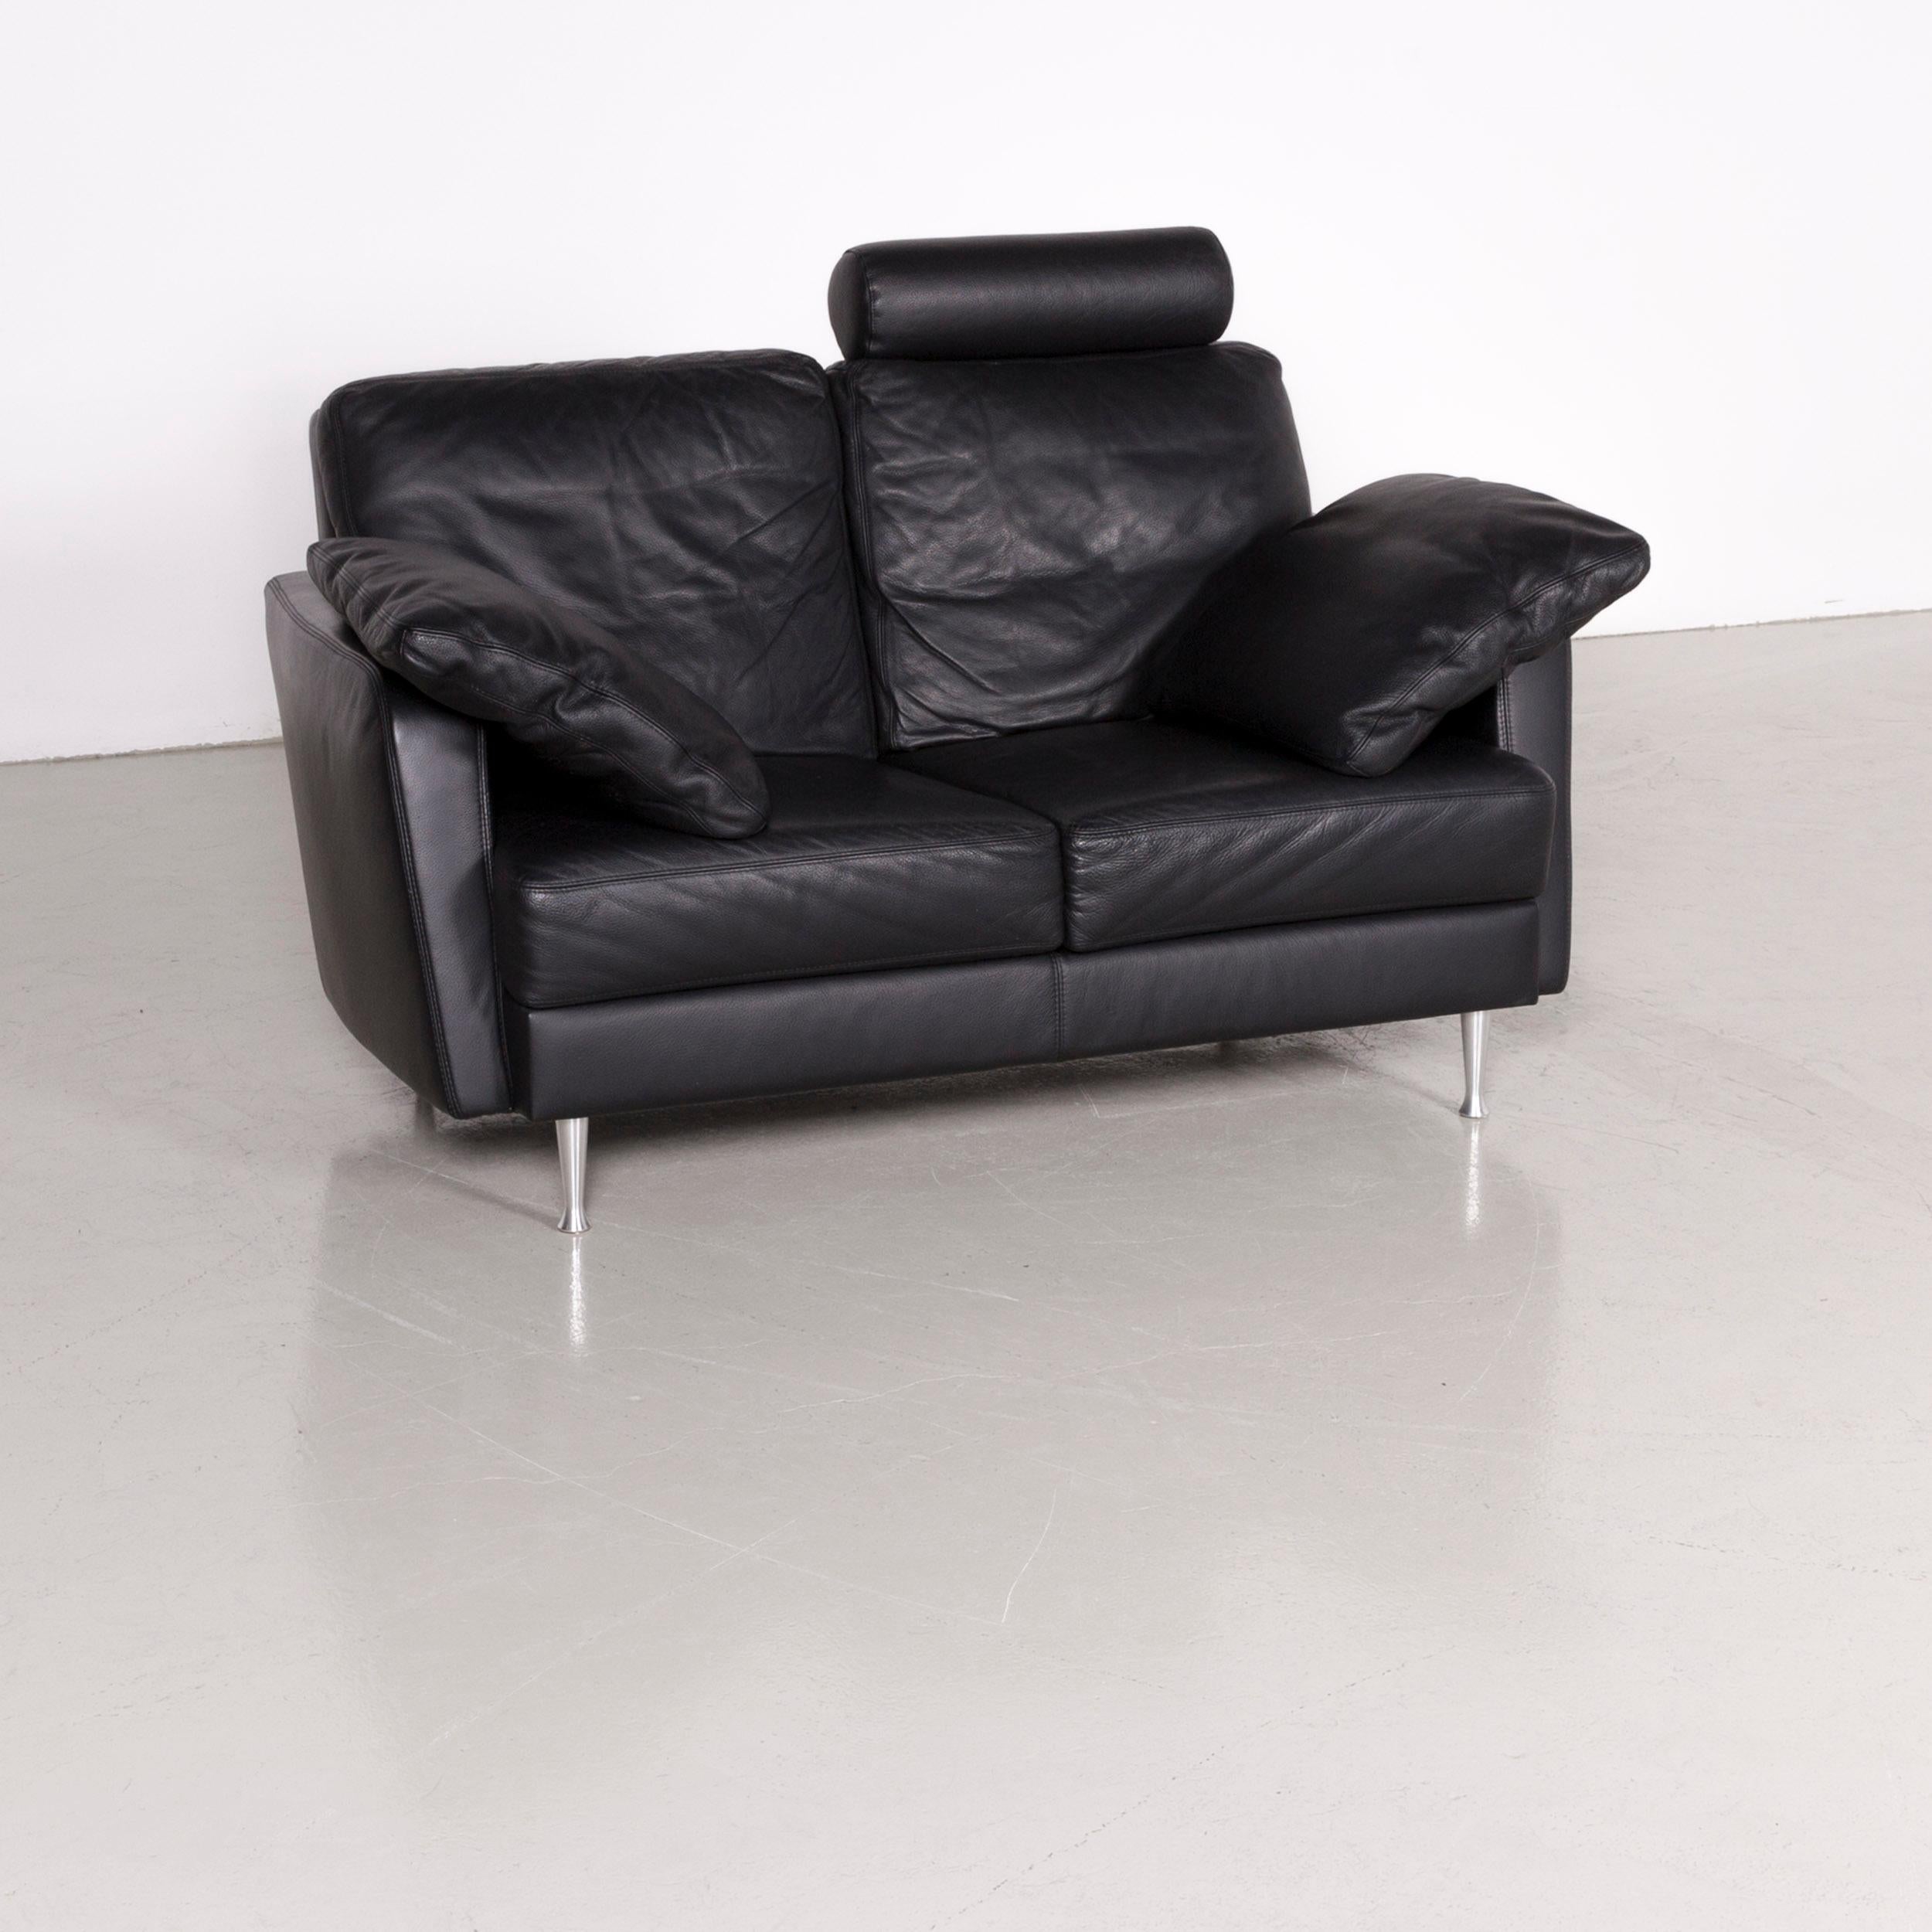 Willi Schillig designer leather sofa black two-seat couch.